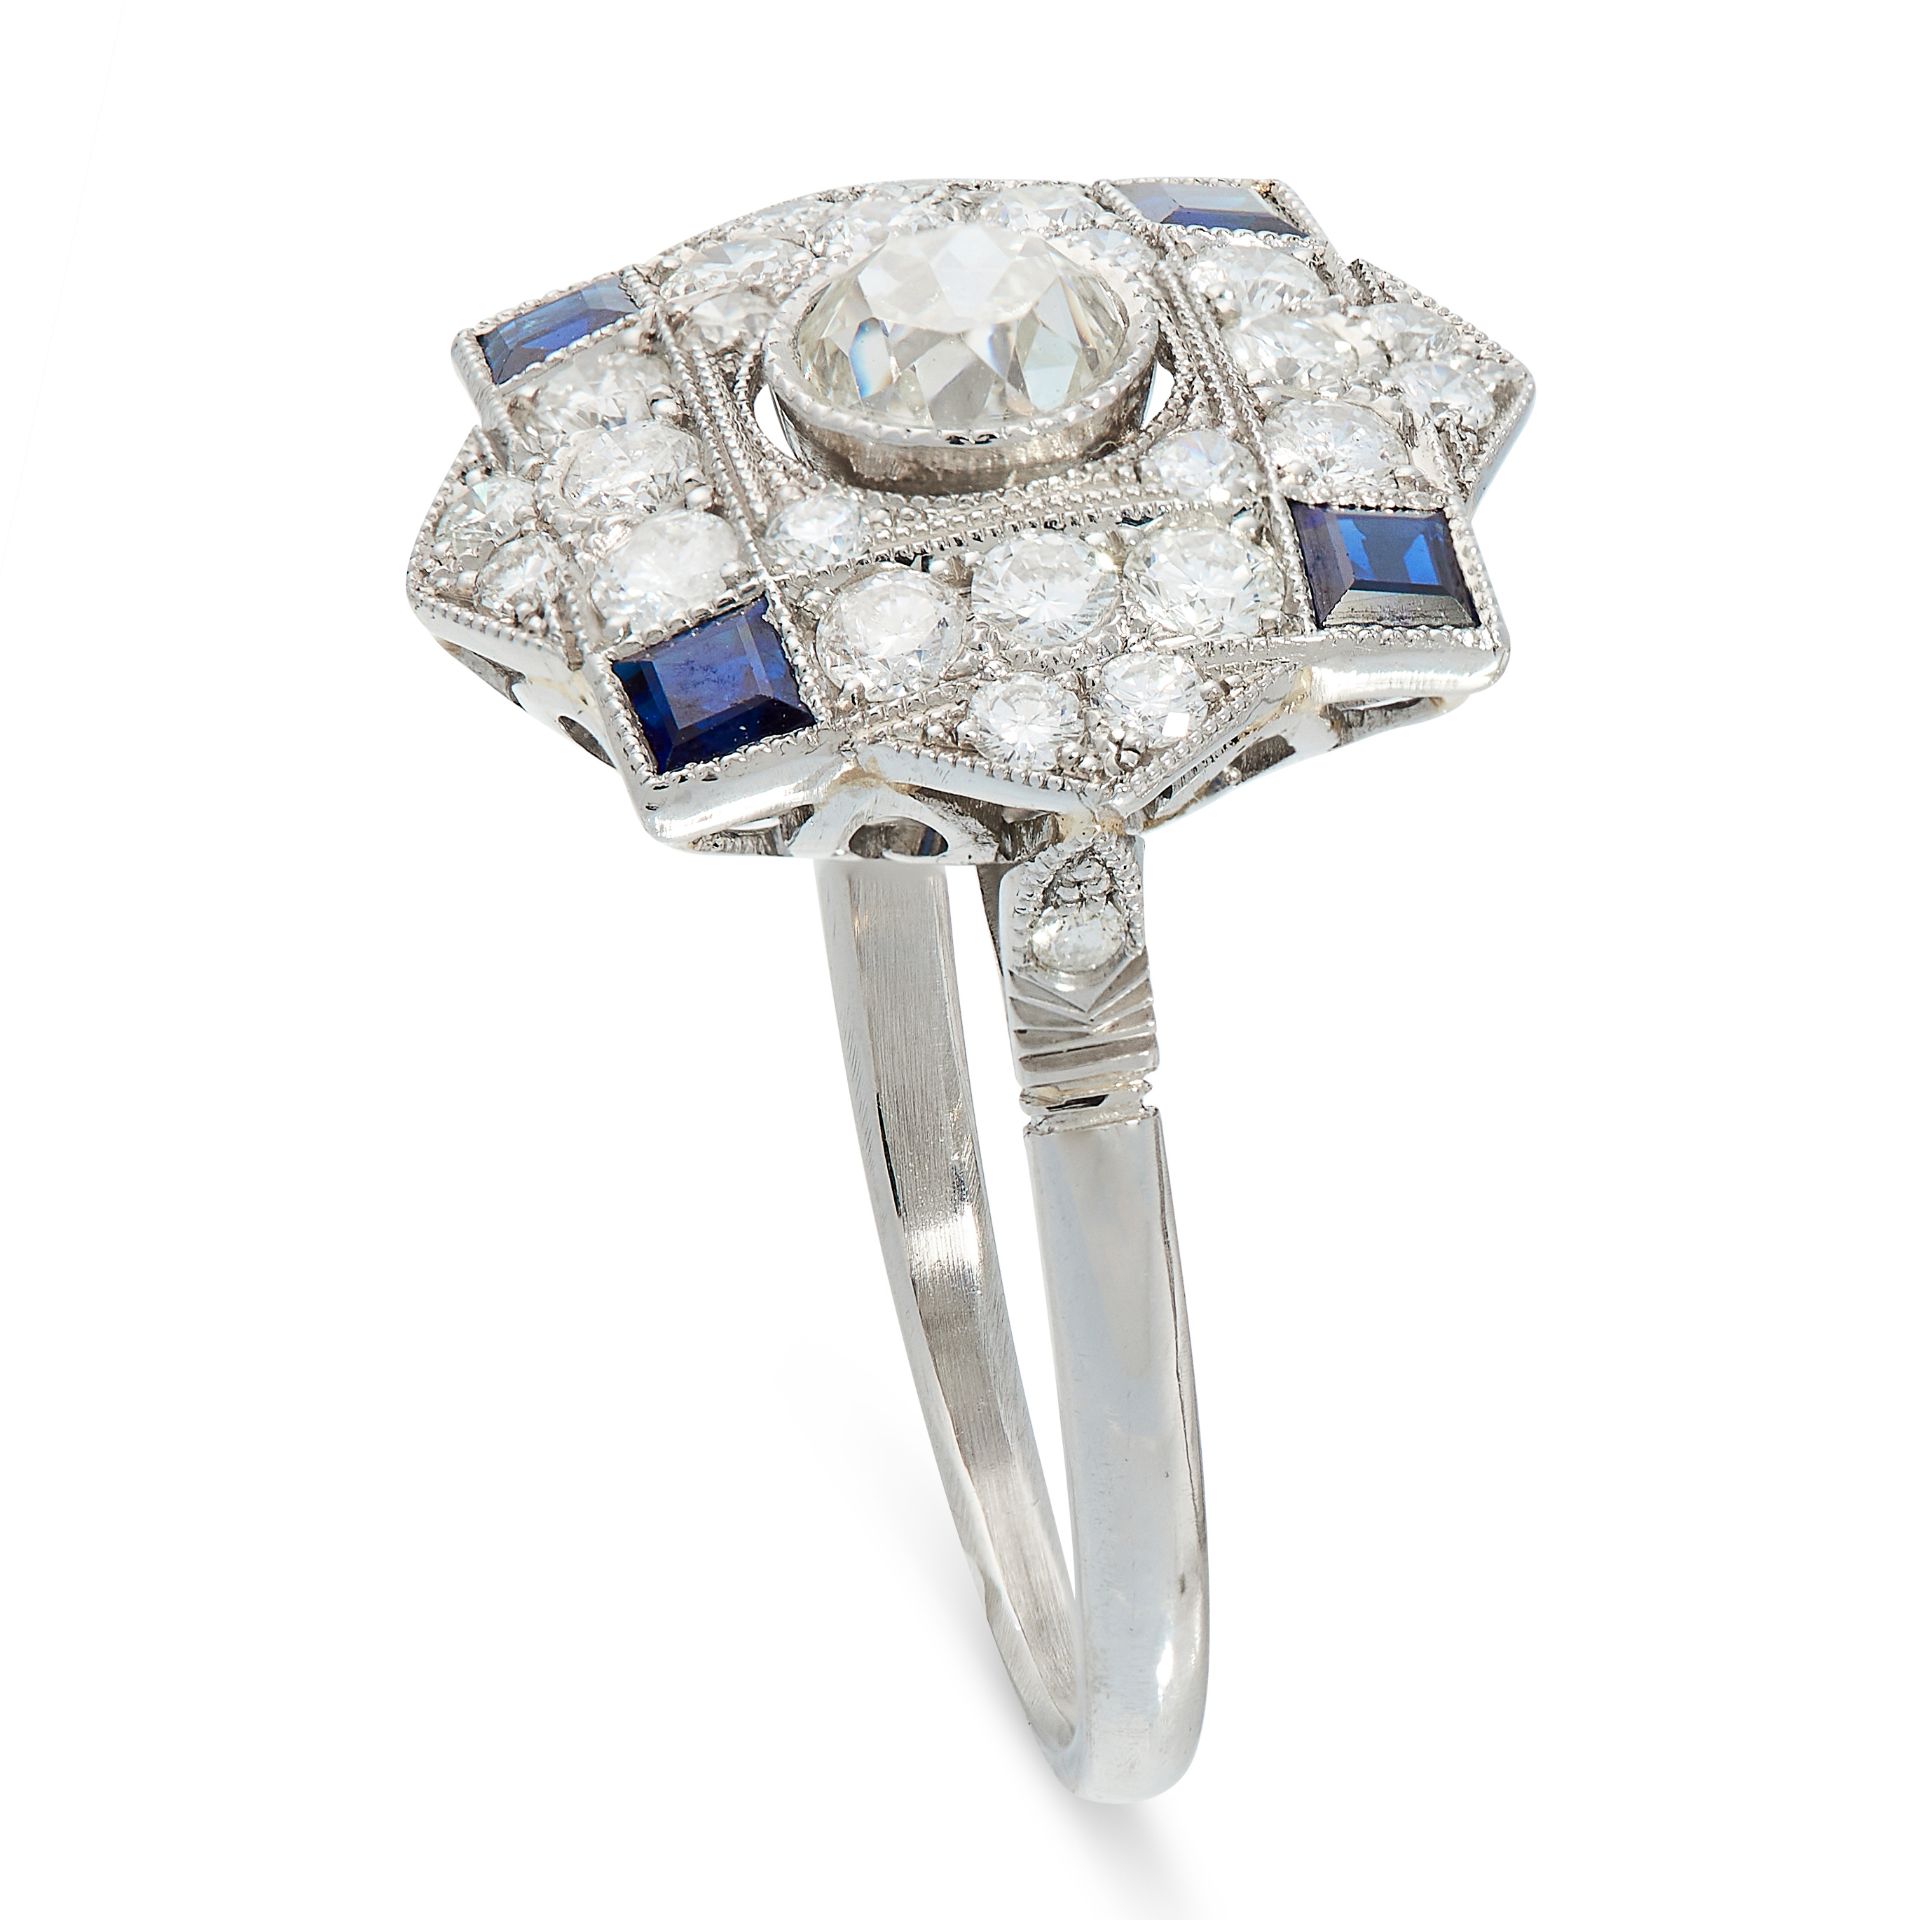 SAPPHIRE AND DIAMOND RING in platinum, in Art Deco design, the square face featuring a quatrefoil - Image 2 of 2